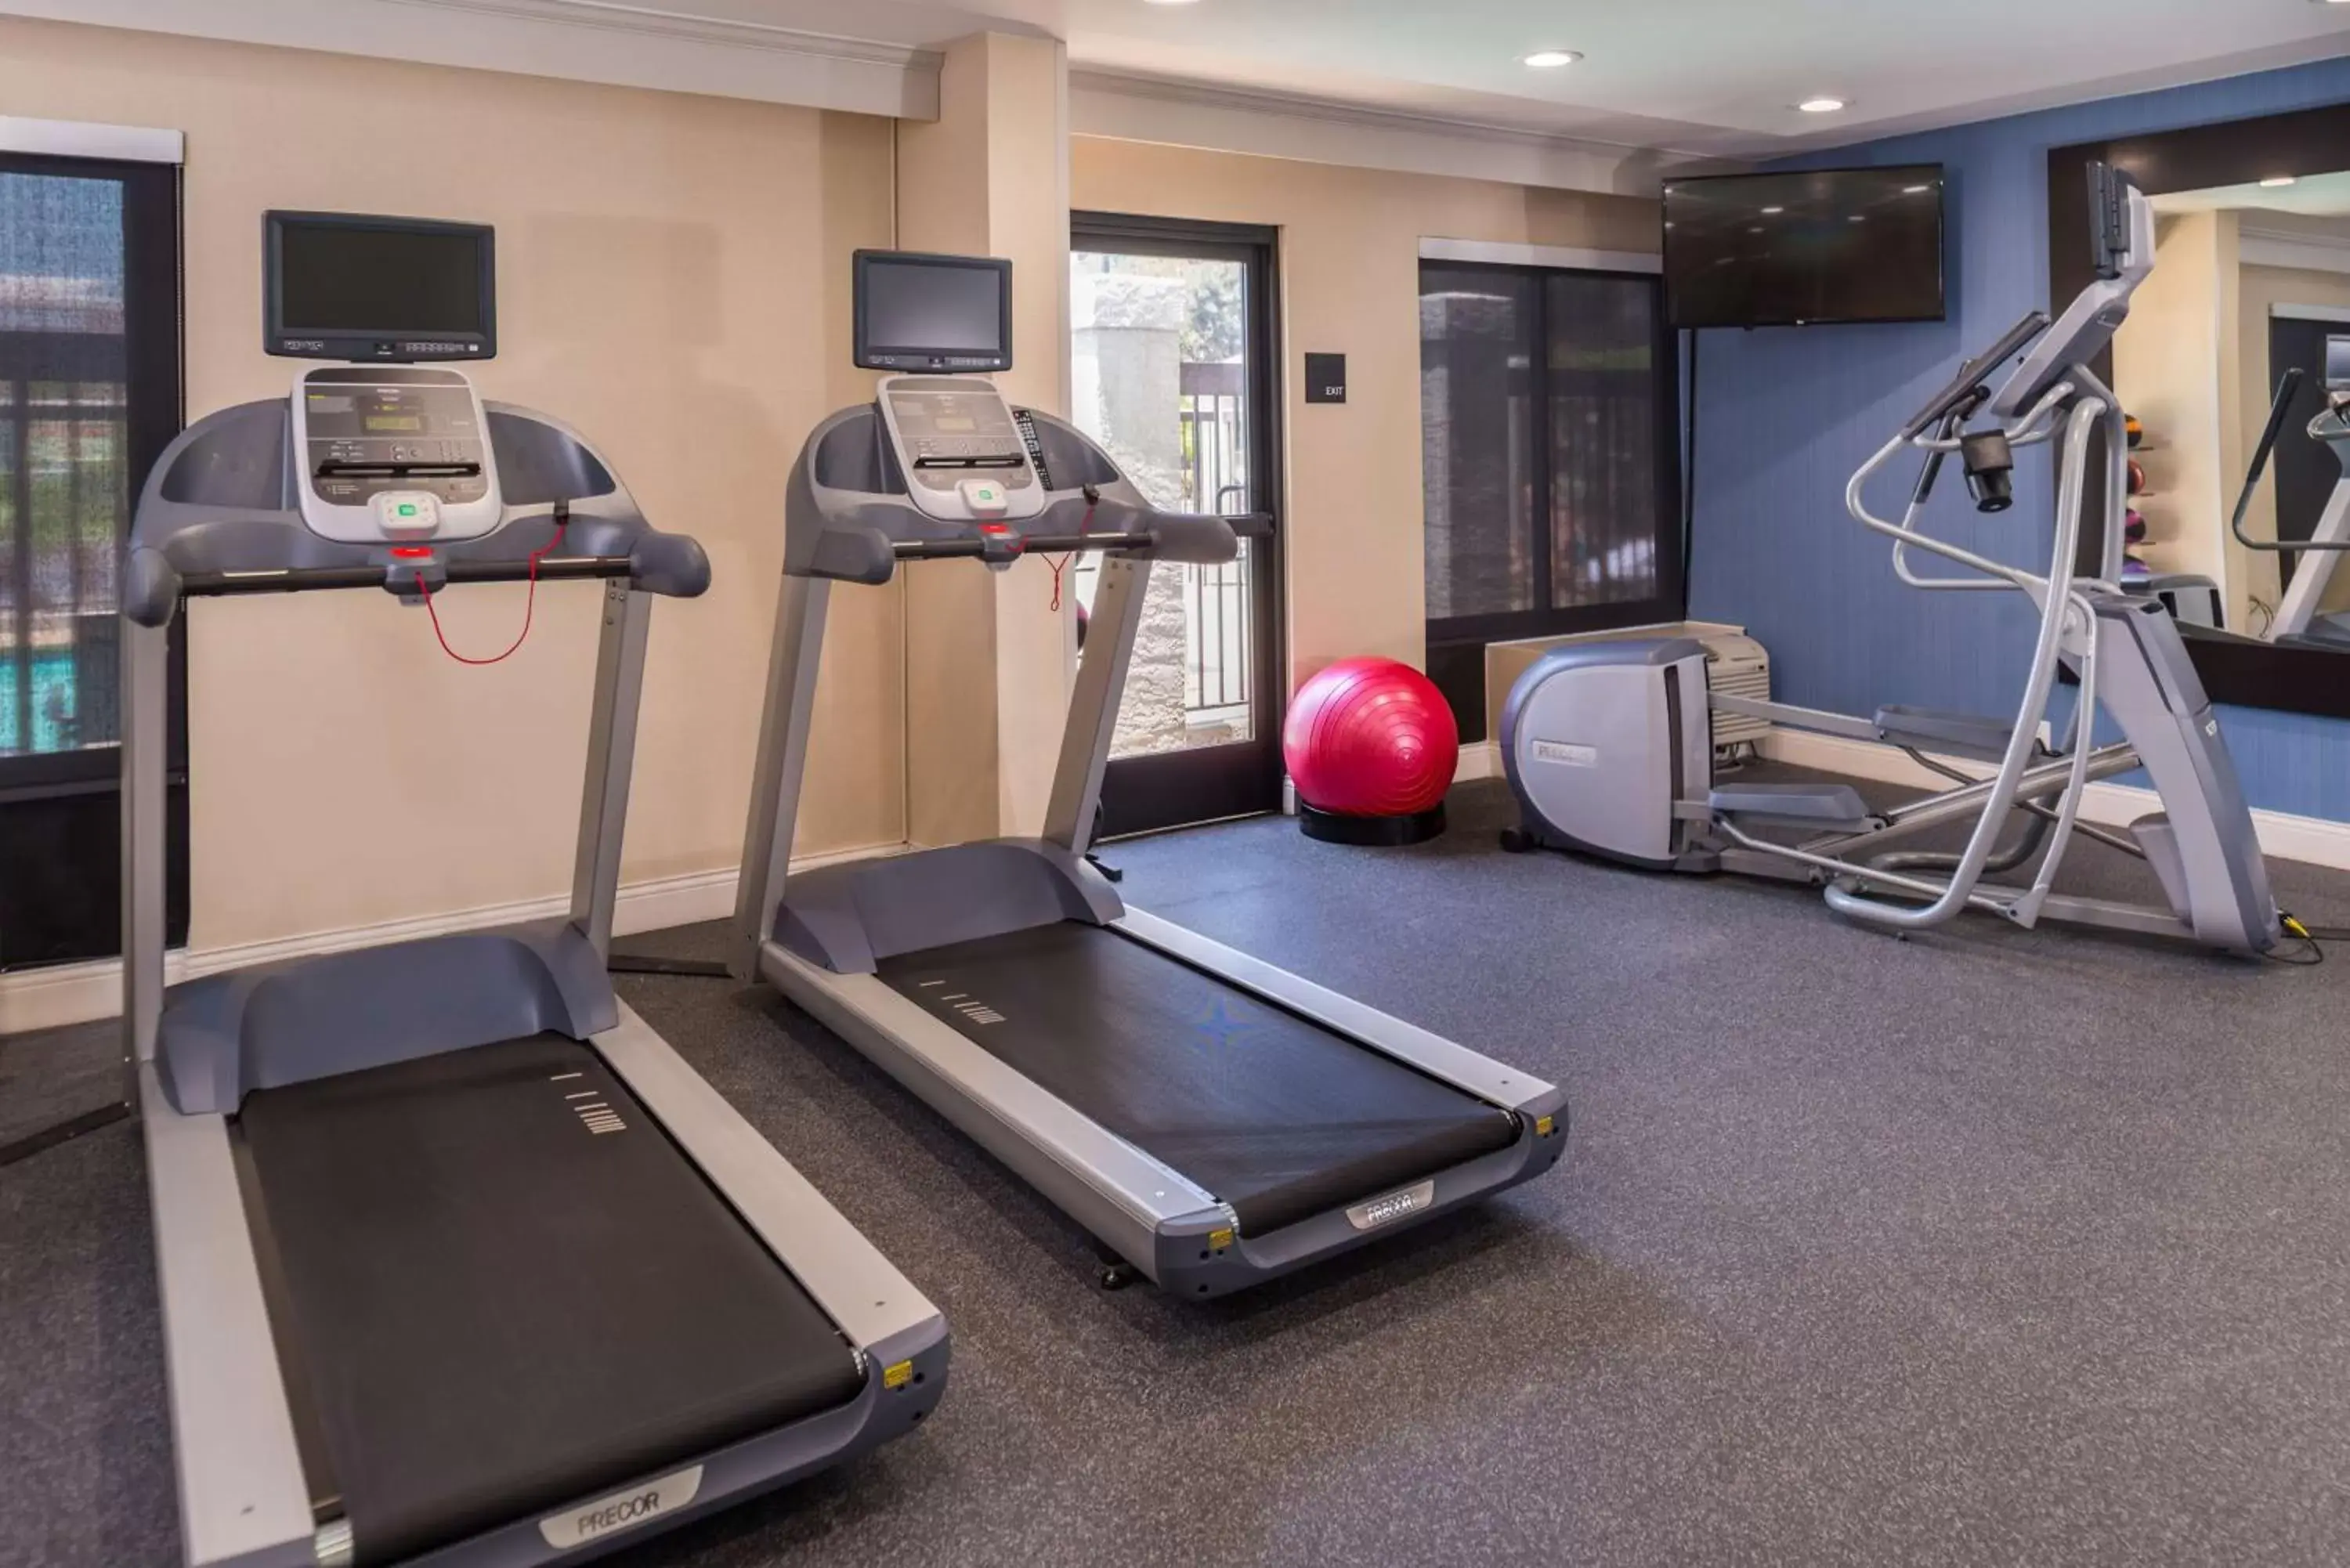 Fitness centre/facilities, Fitness Center/Facilities in Hampton Inn Los Angeles-West Covina